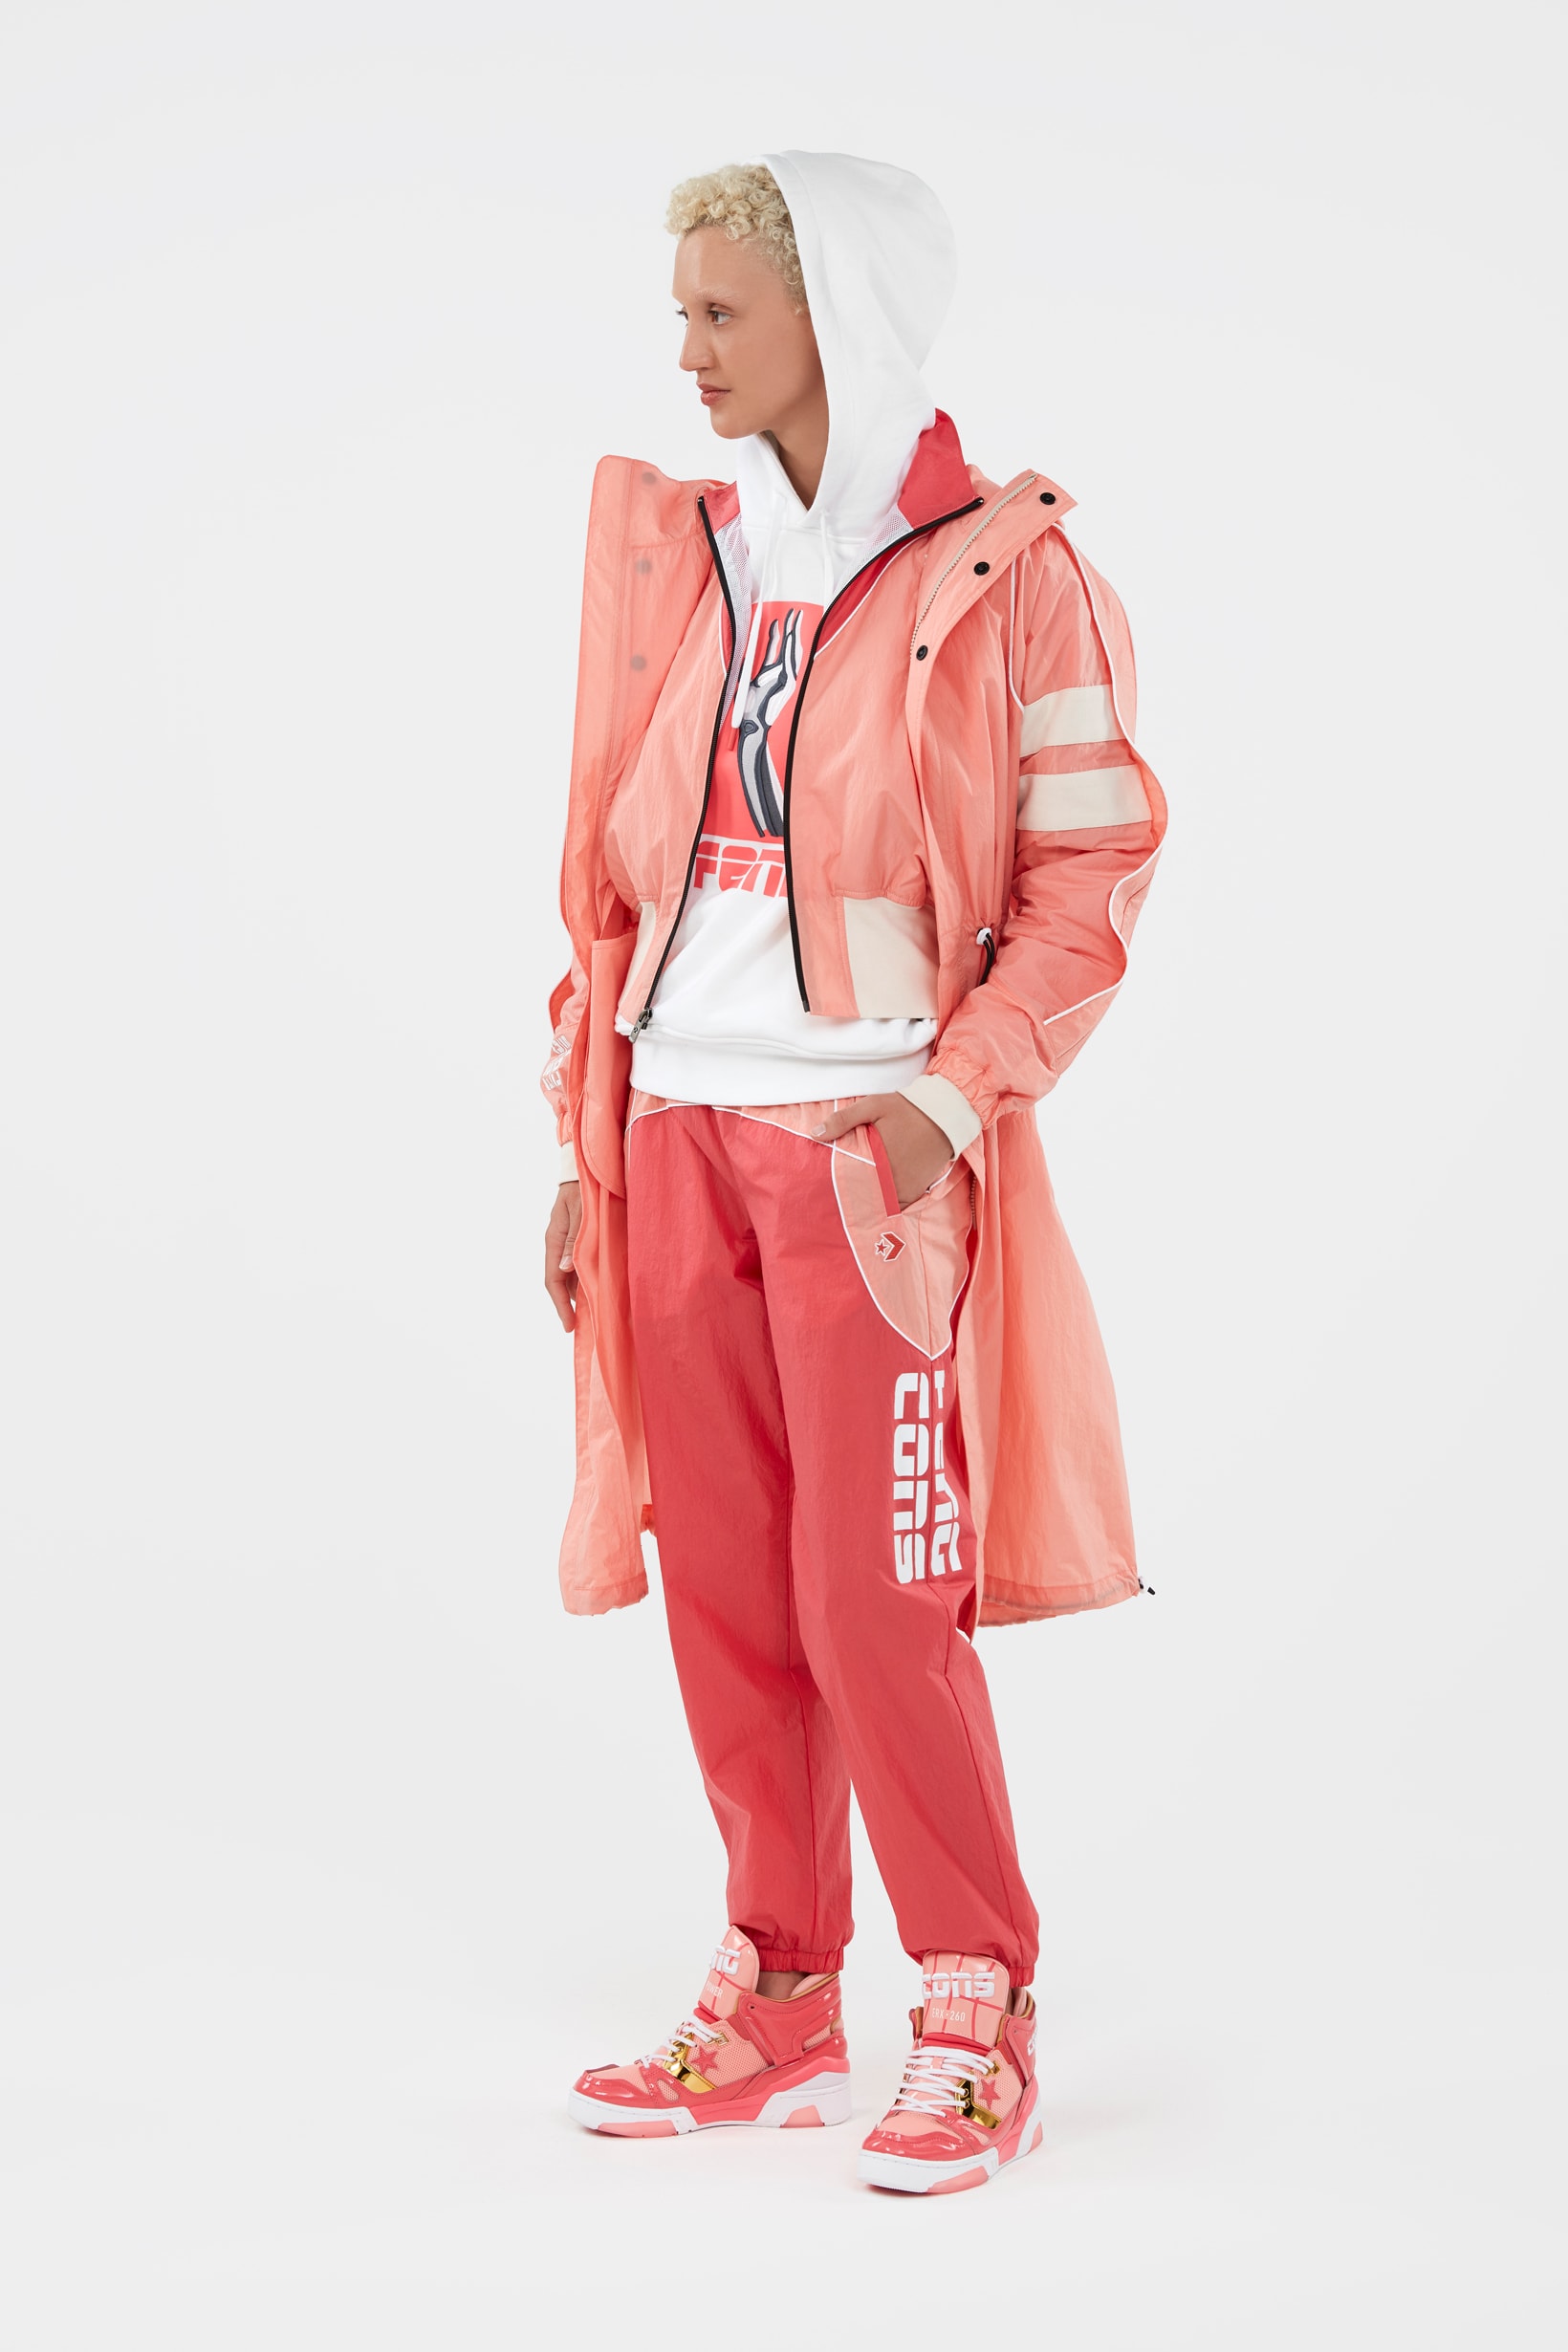 KOCHÉ x Faith Connexion x Feng Chen Wang x Converse Capsule Collection Jacket Pants Pink Hoodie White